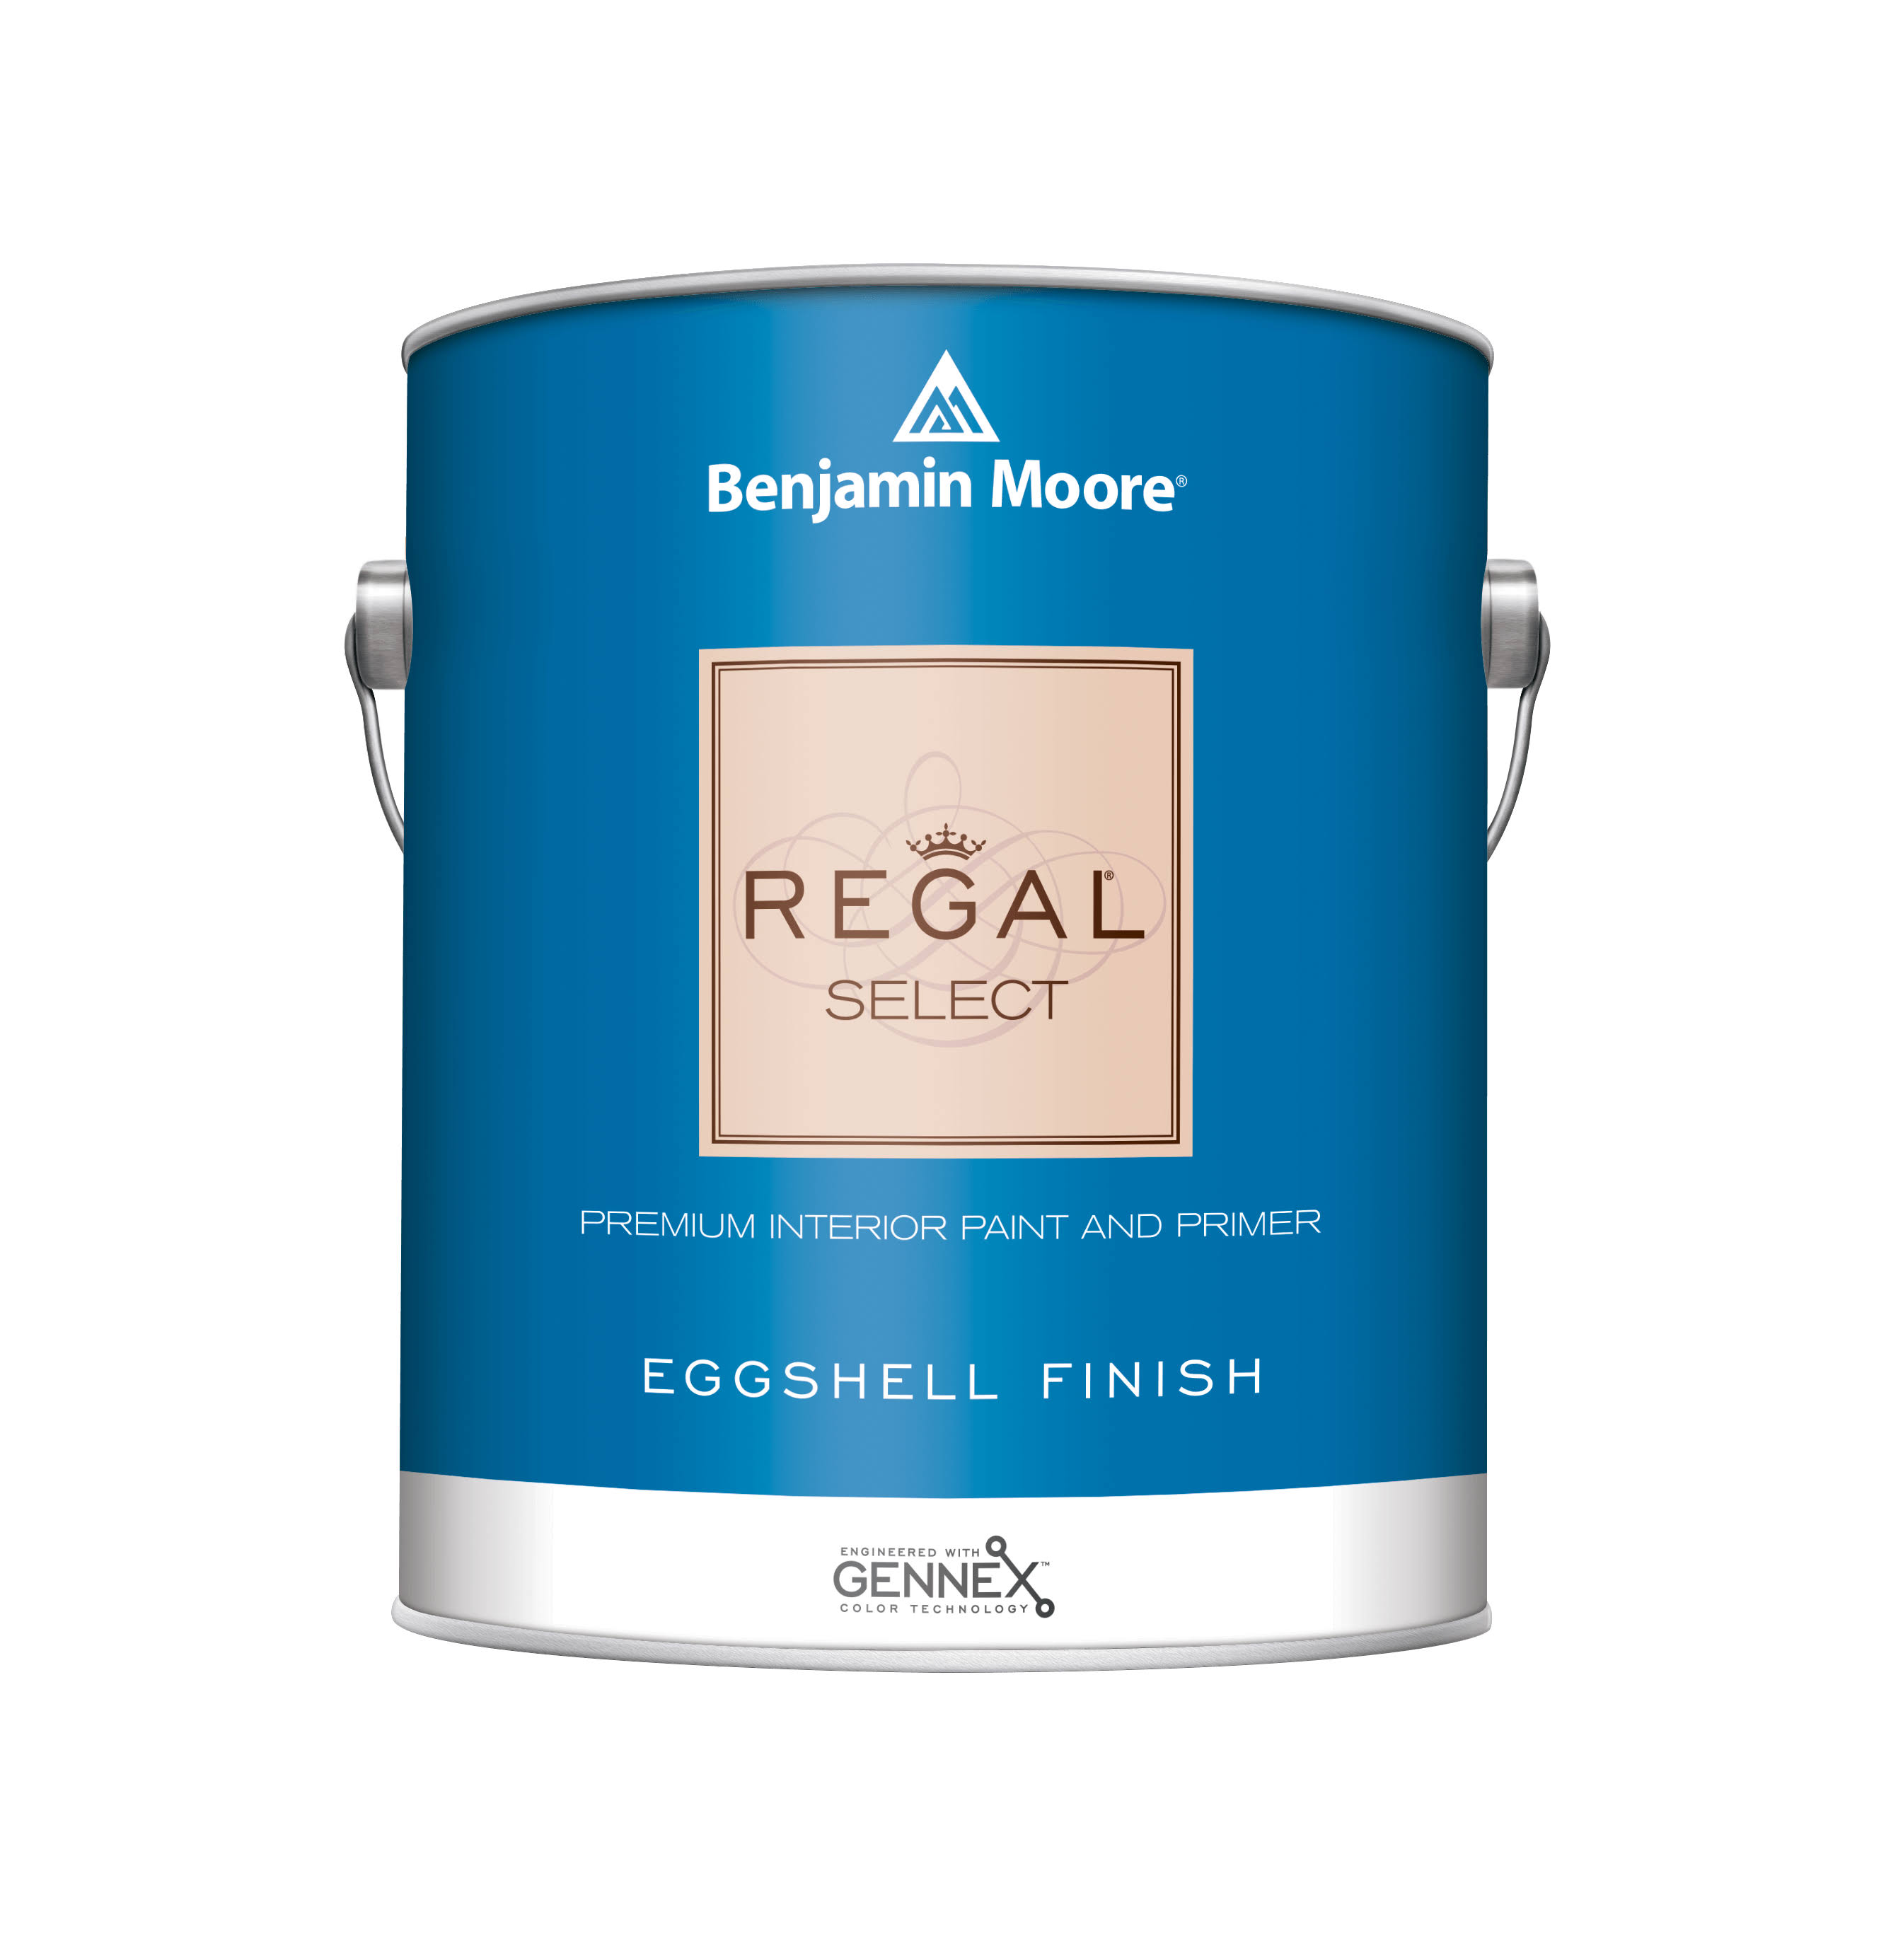 Benjamin Moore Regal Select Interior Paint - Eggshell